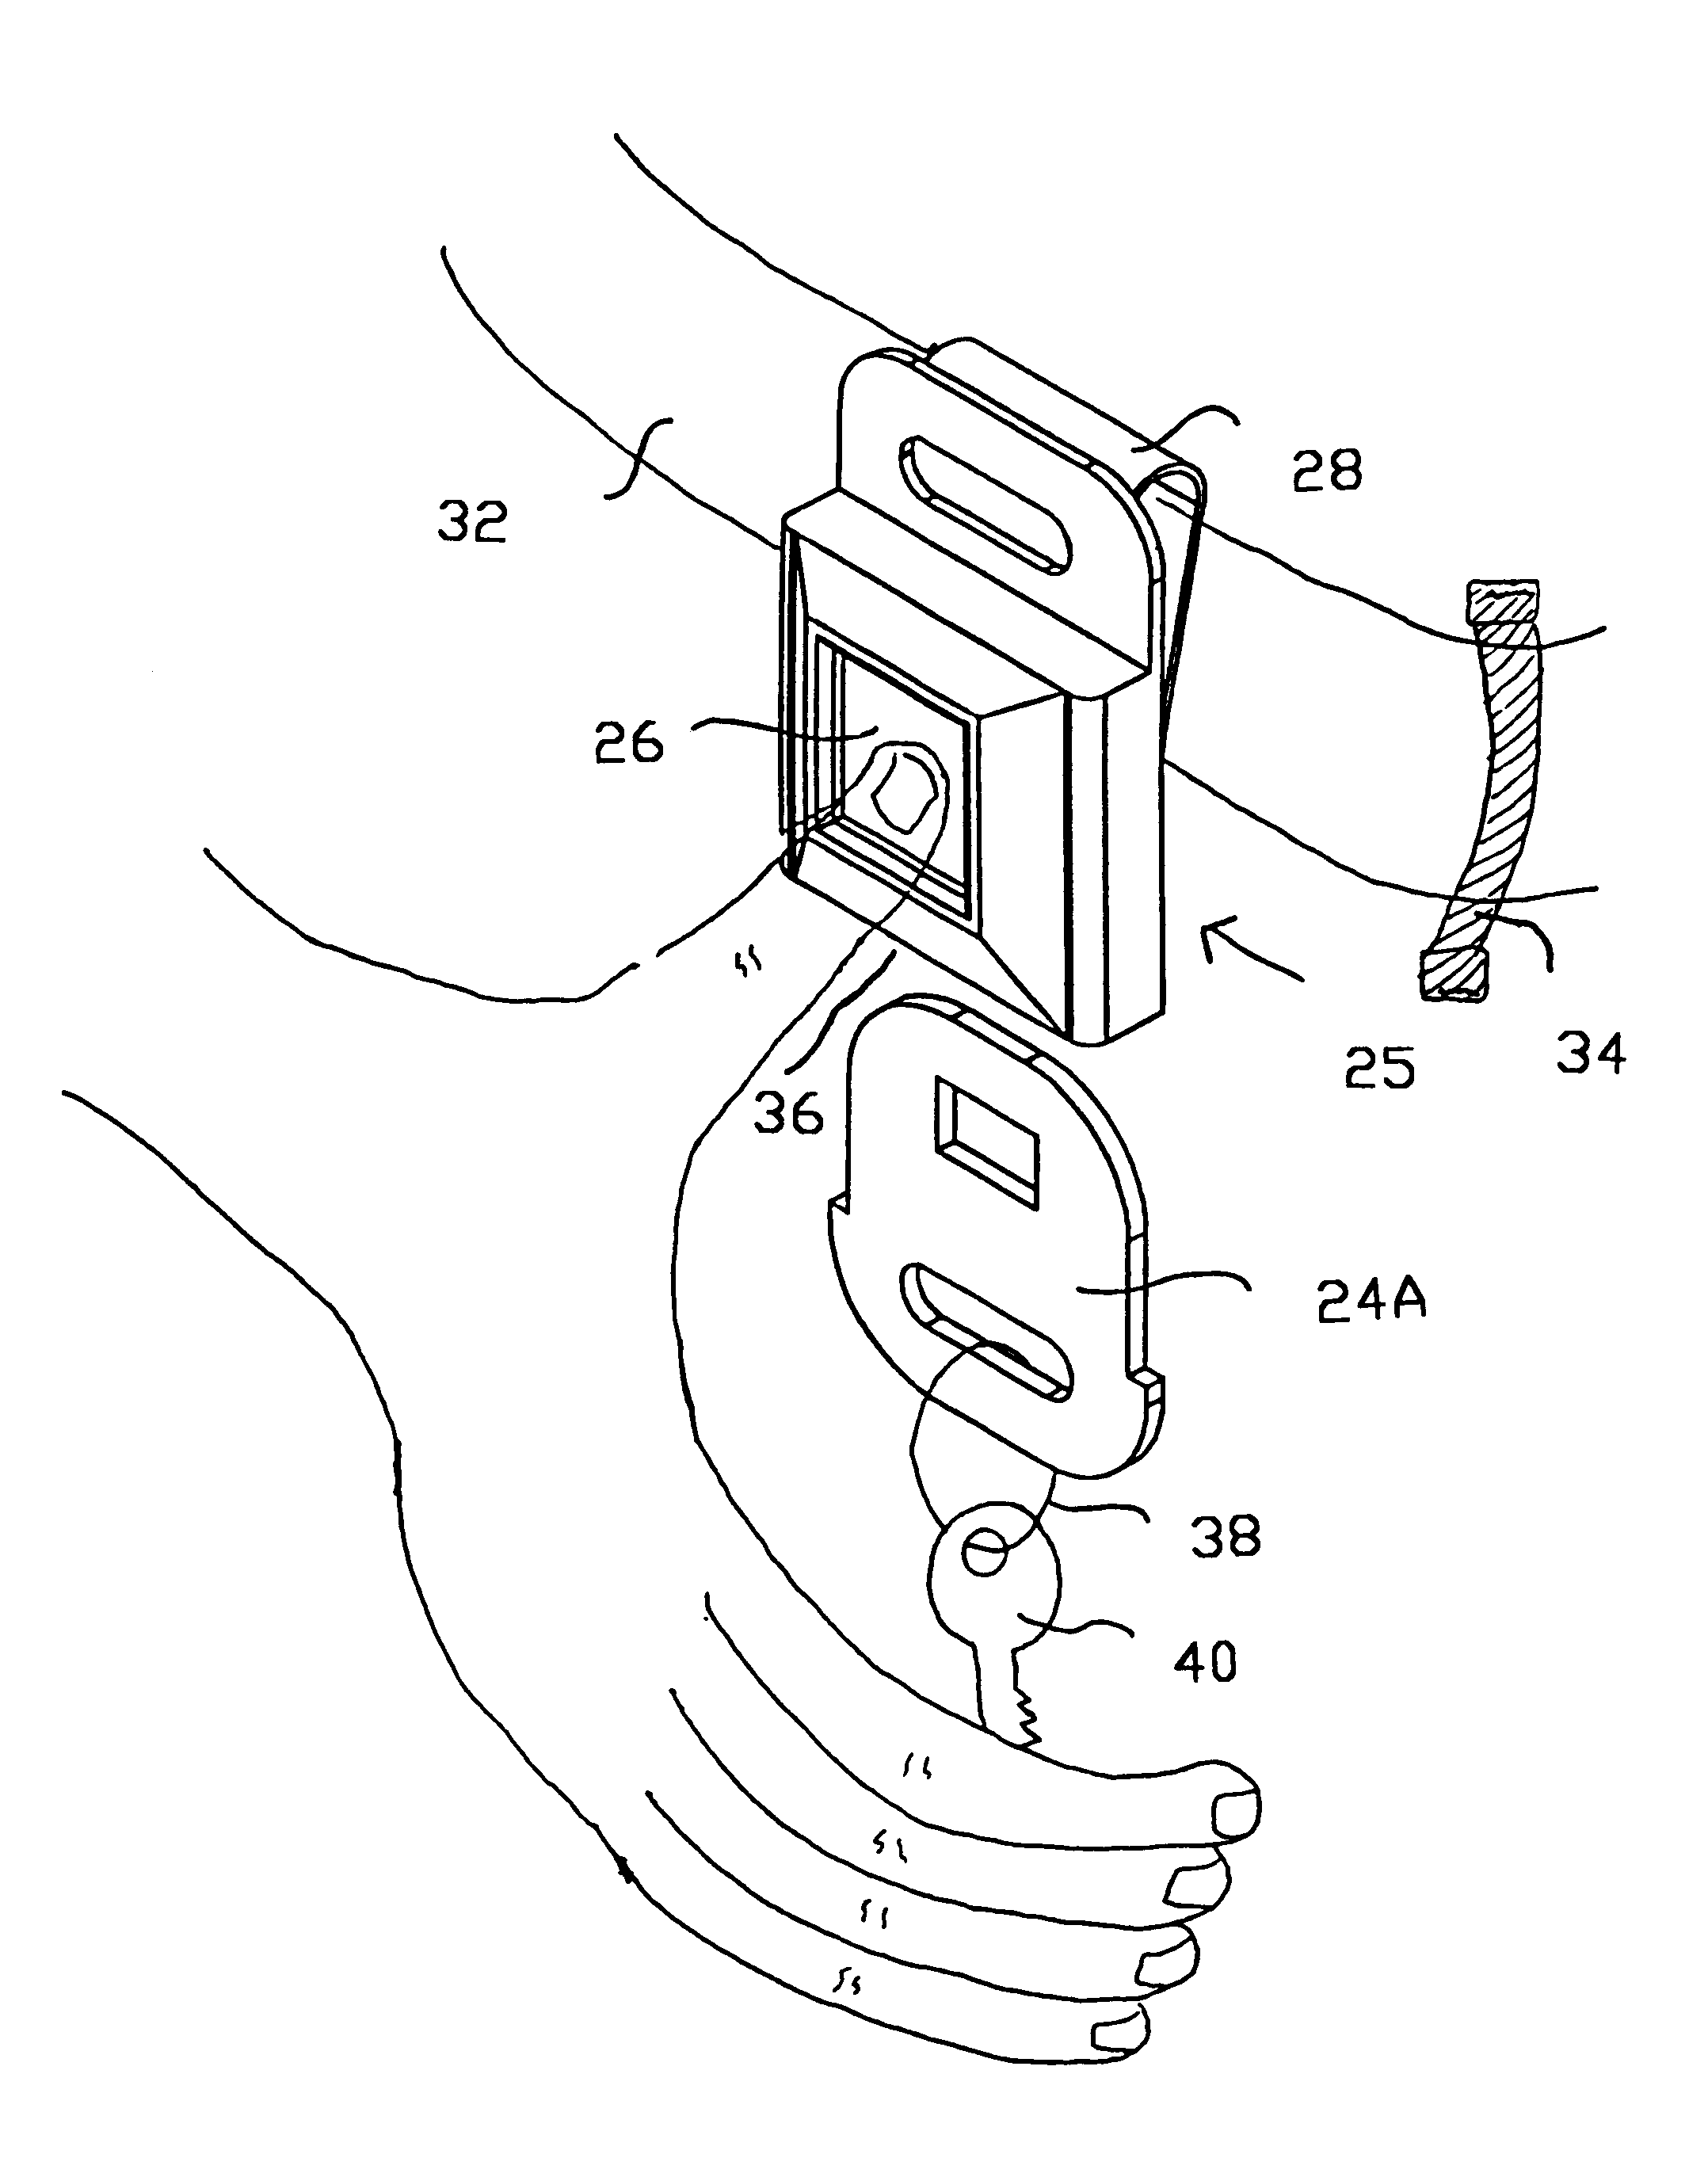 Waist mounted accessory holder